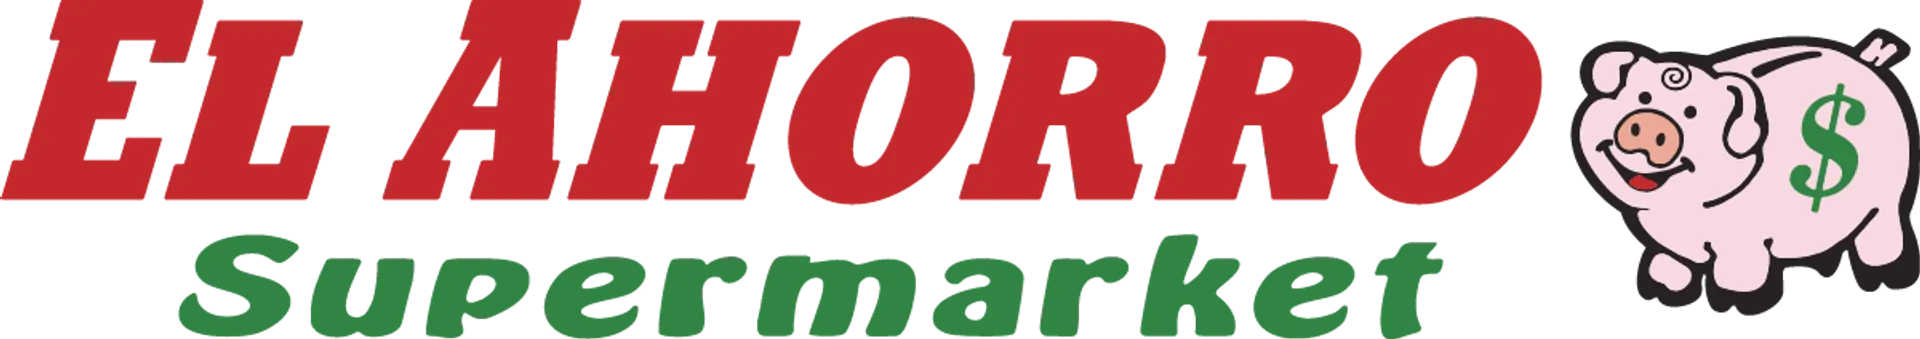 EL AHORRO SUPERMARKET logo current weekly ad